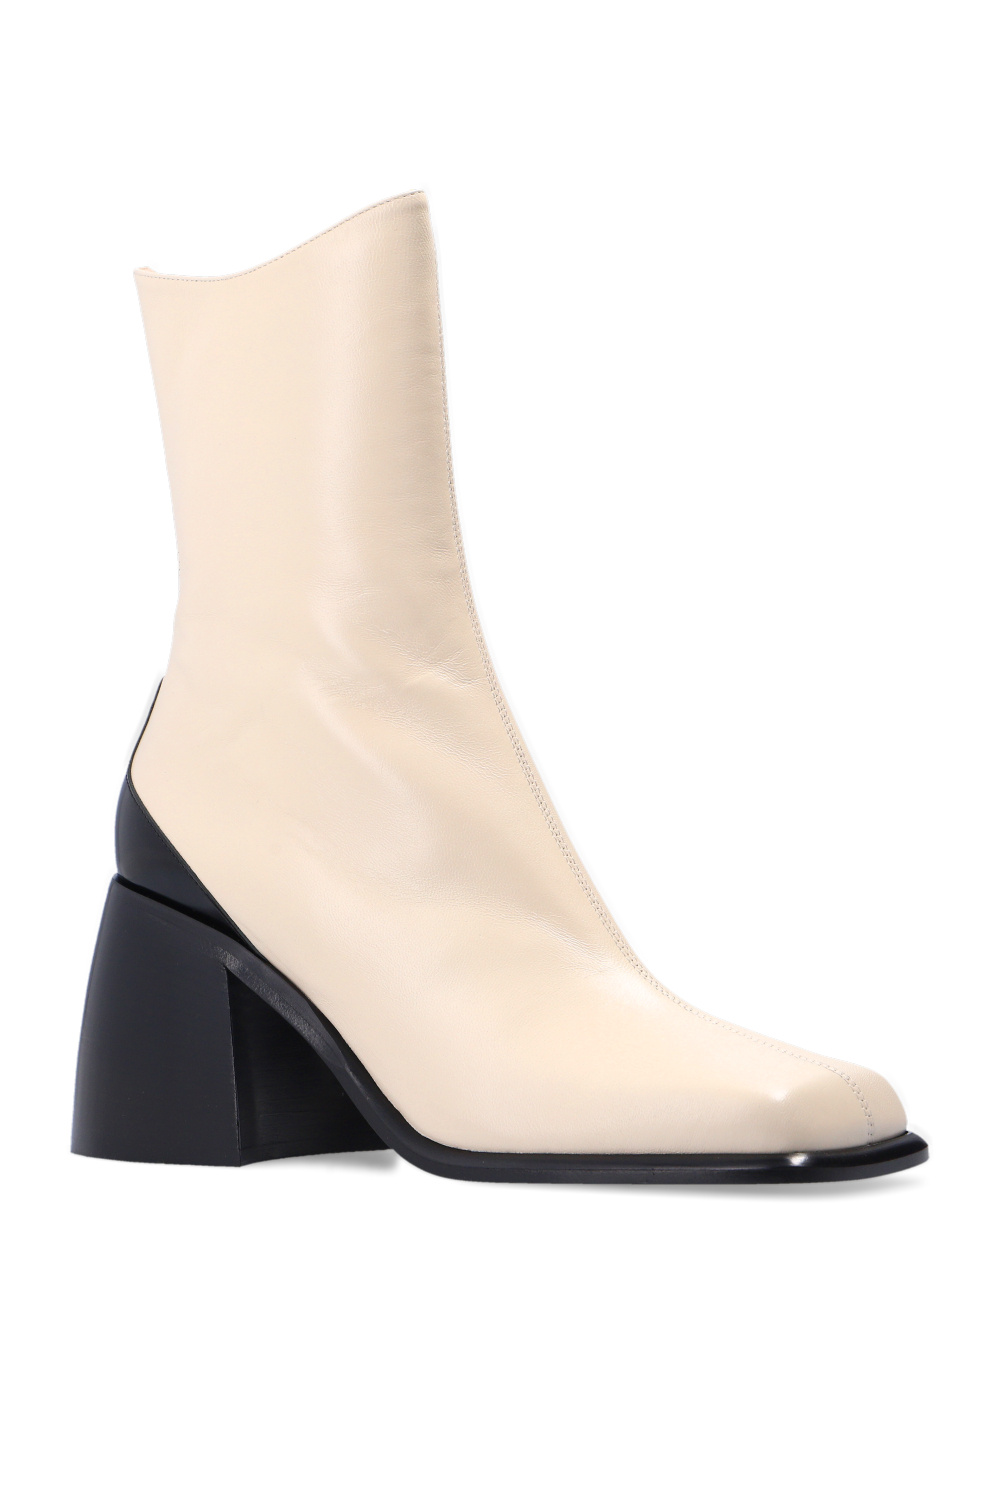 Wandler ‘Ella’ heeled ankle boots